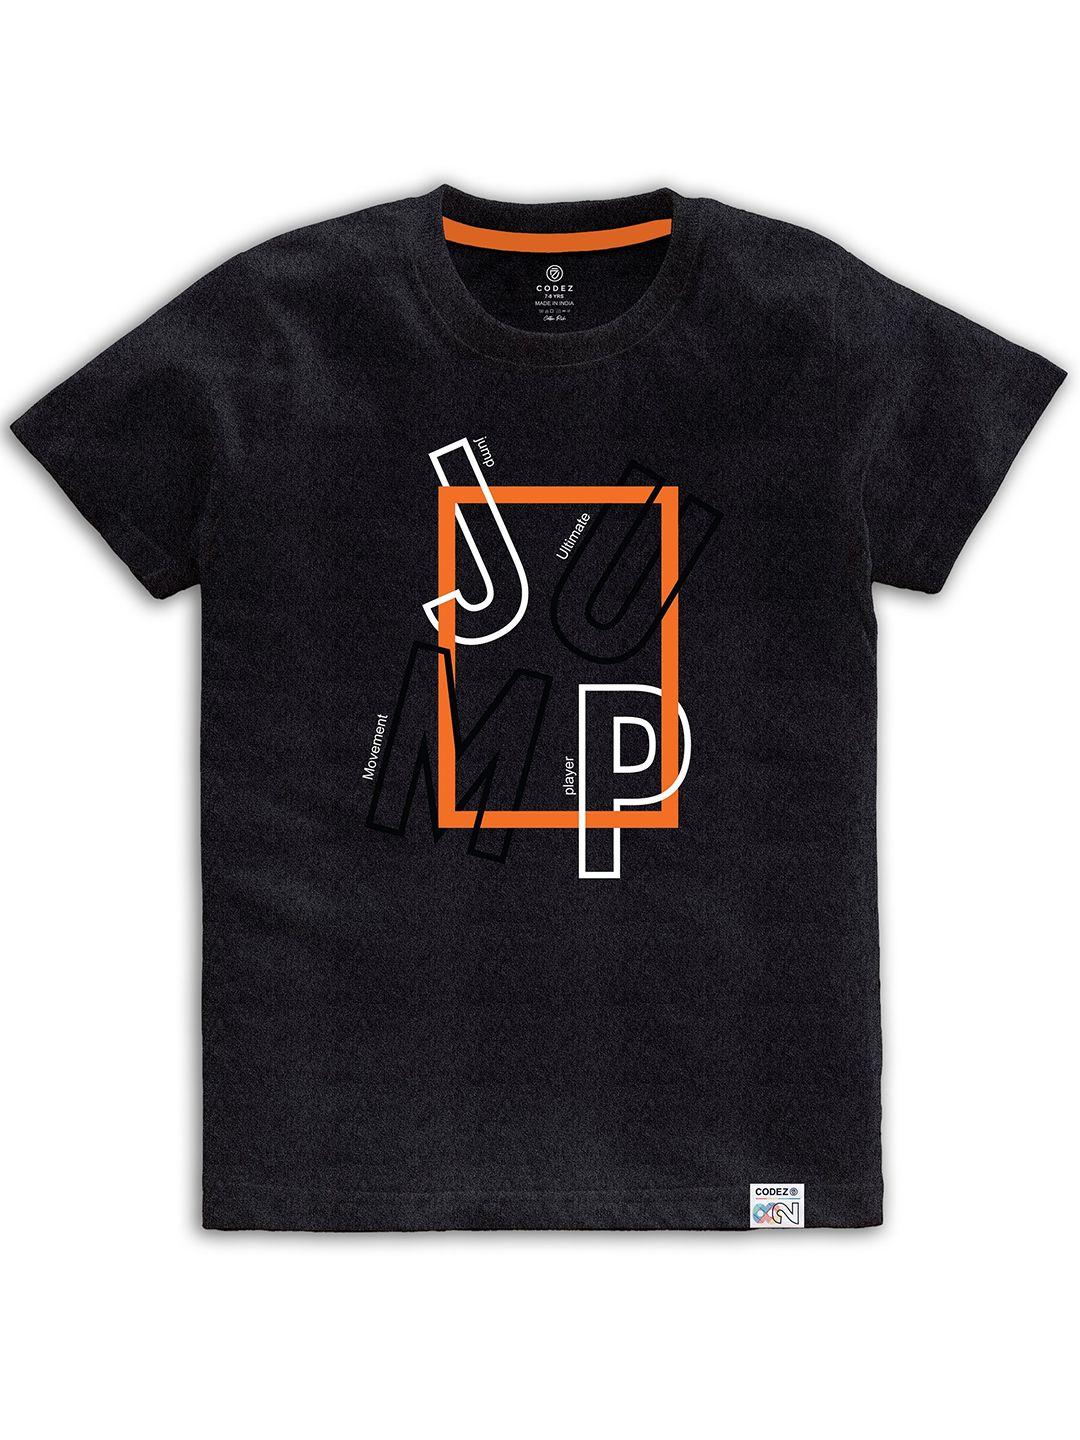 codez-boys-charcoal-printed-applique-t-shirt